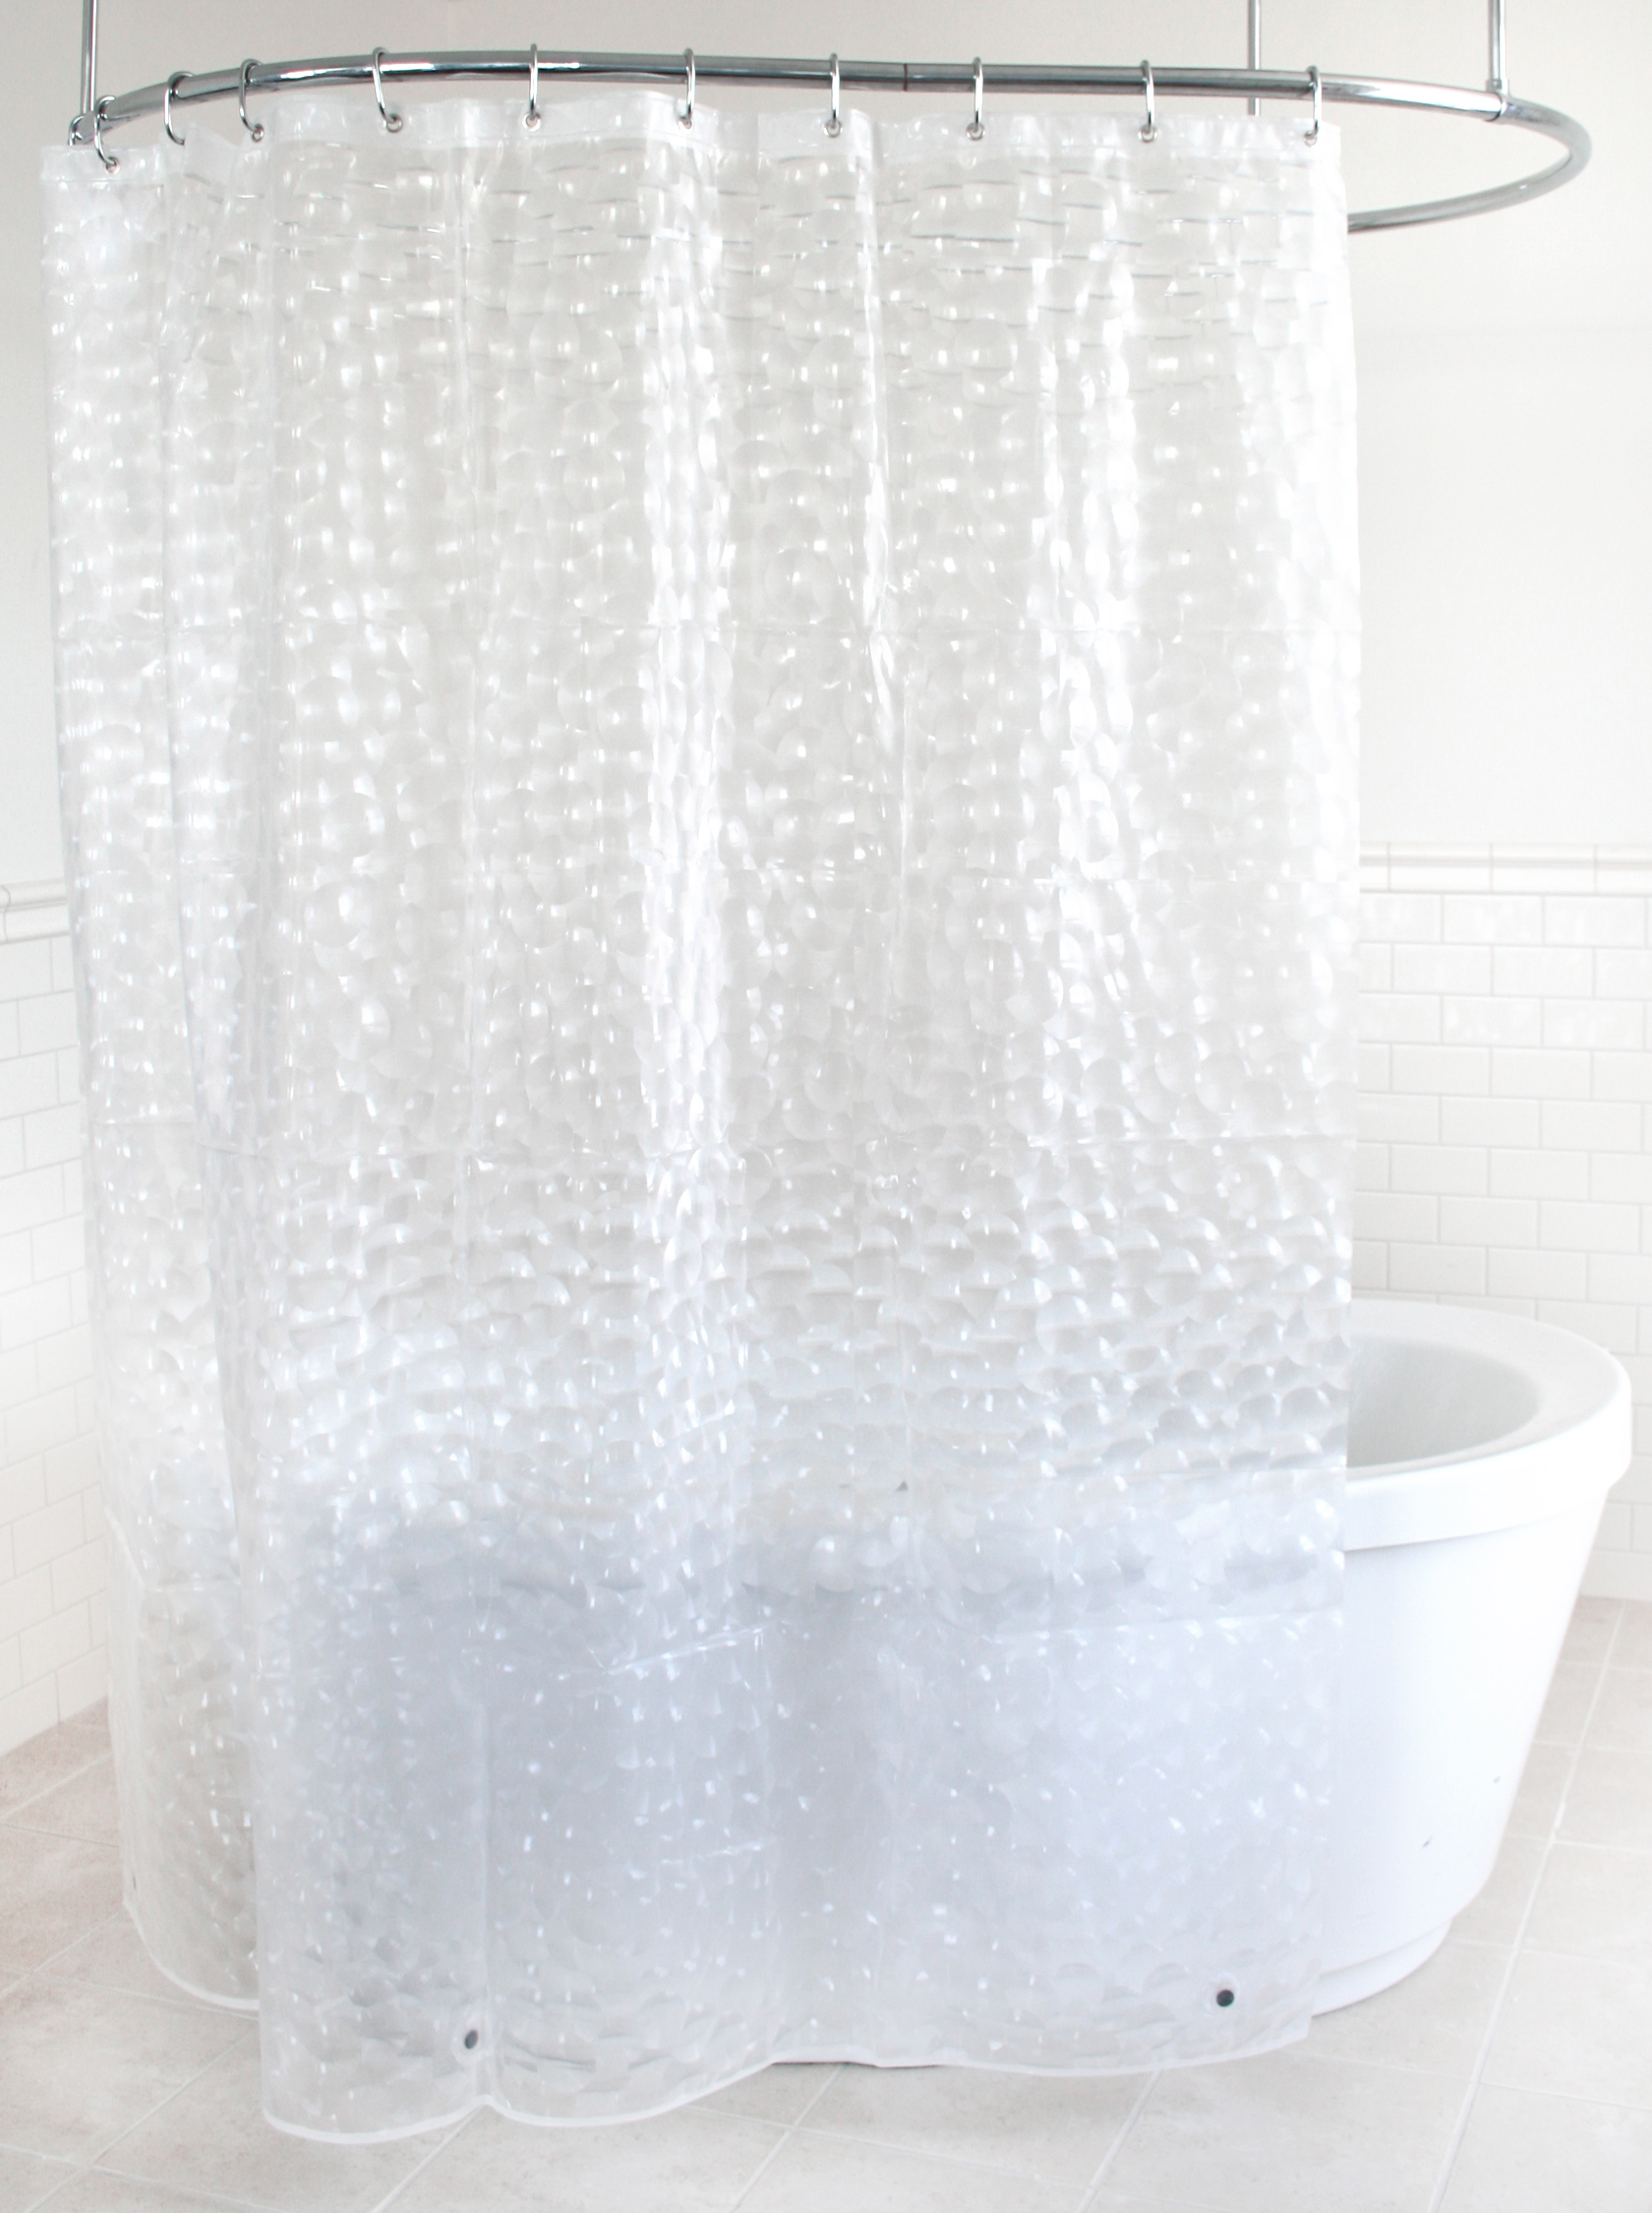 Bubbles textured PEVA shower curtain 